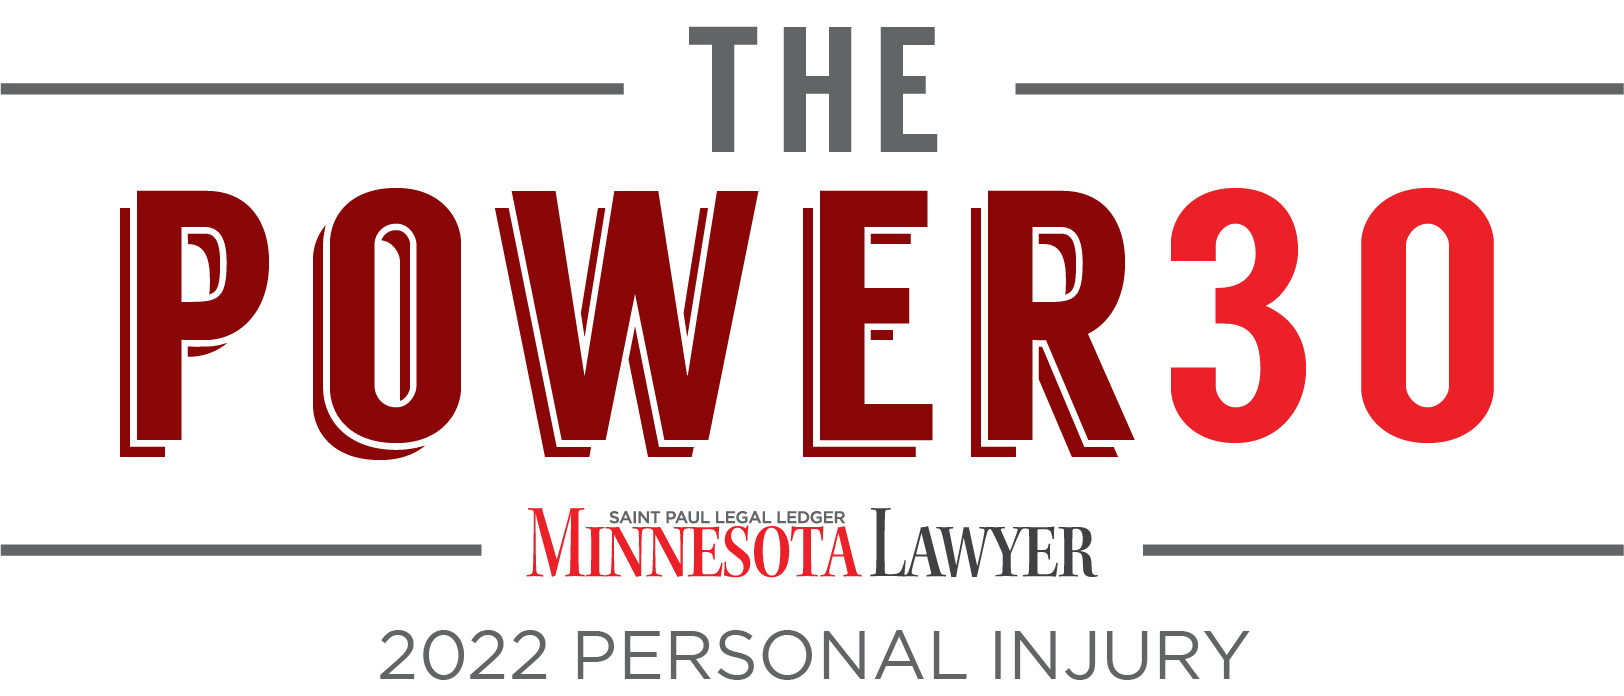 The POWER 30 Minnesota Lawyer 2022 Personal Injury